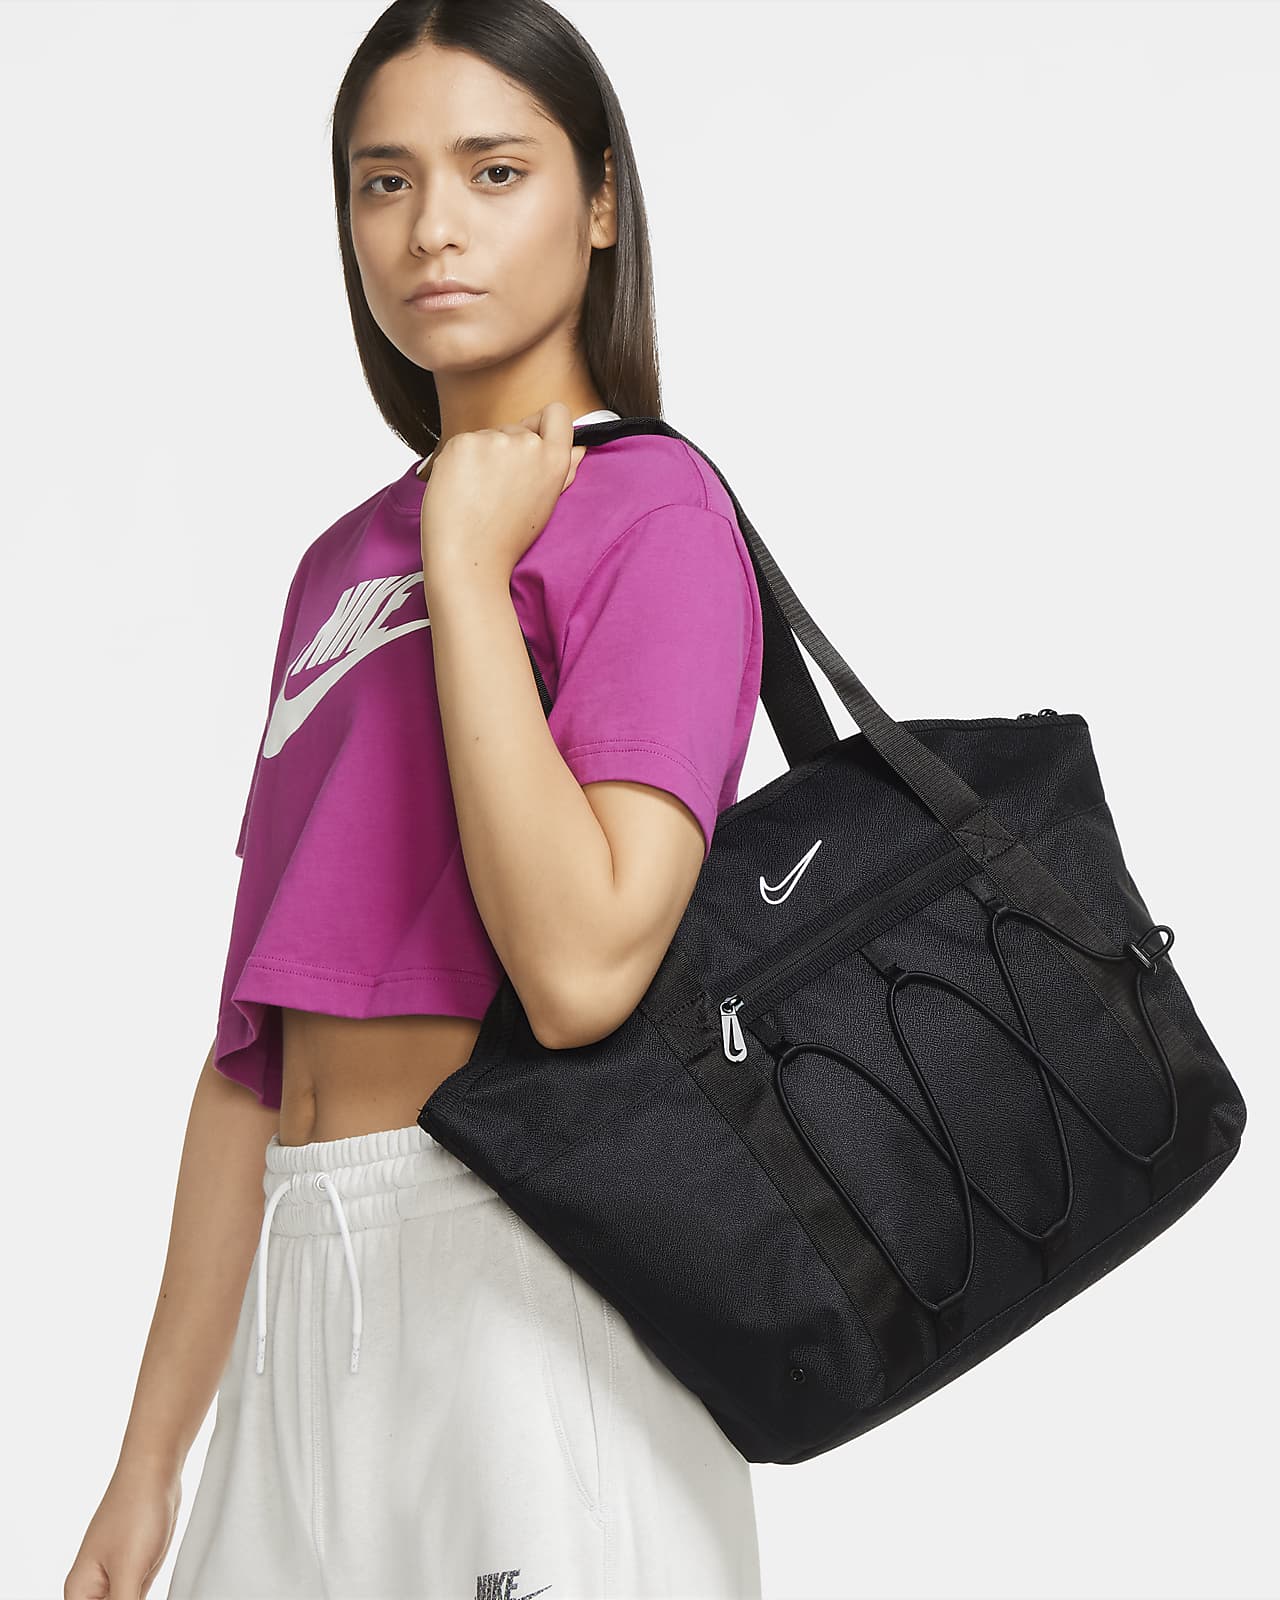 Nike One Women's Training Tote Bag 